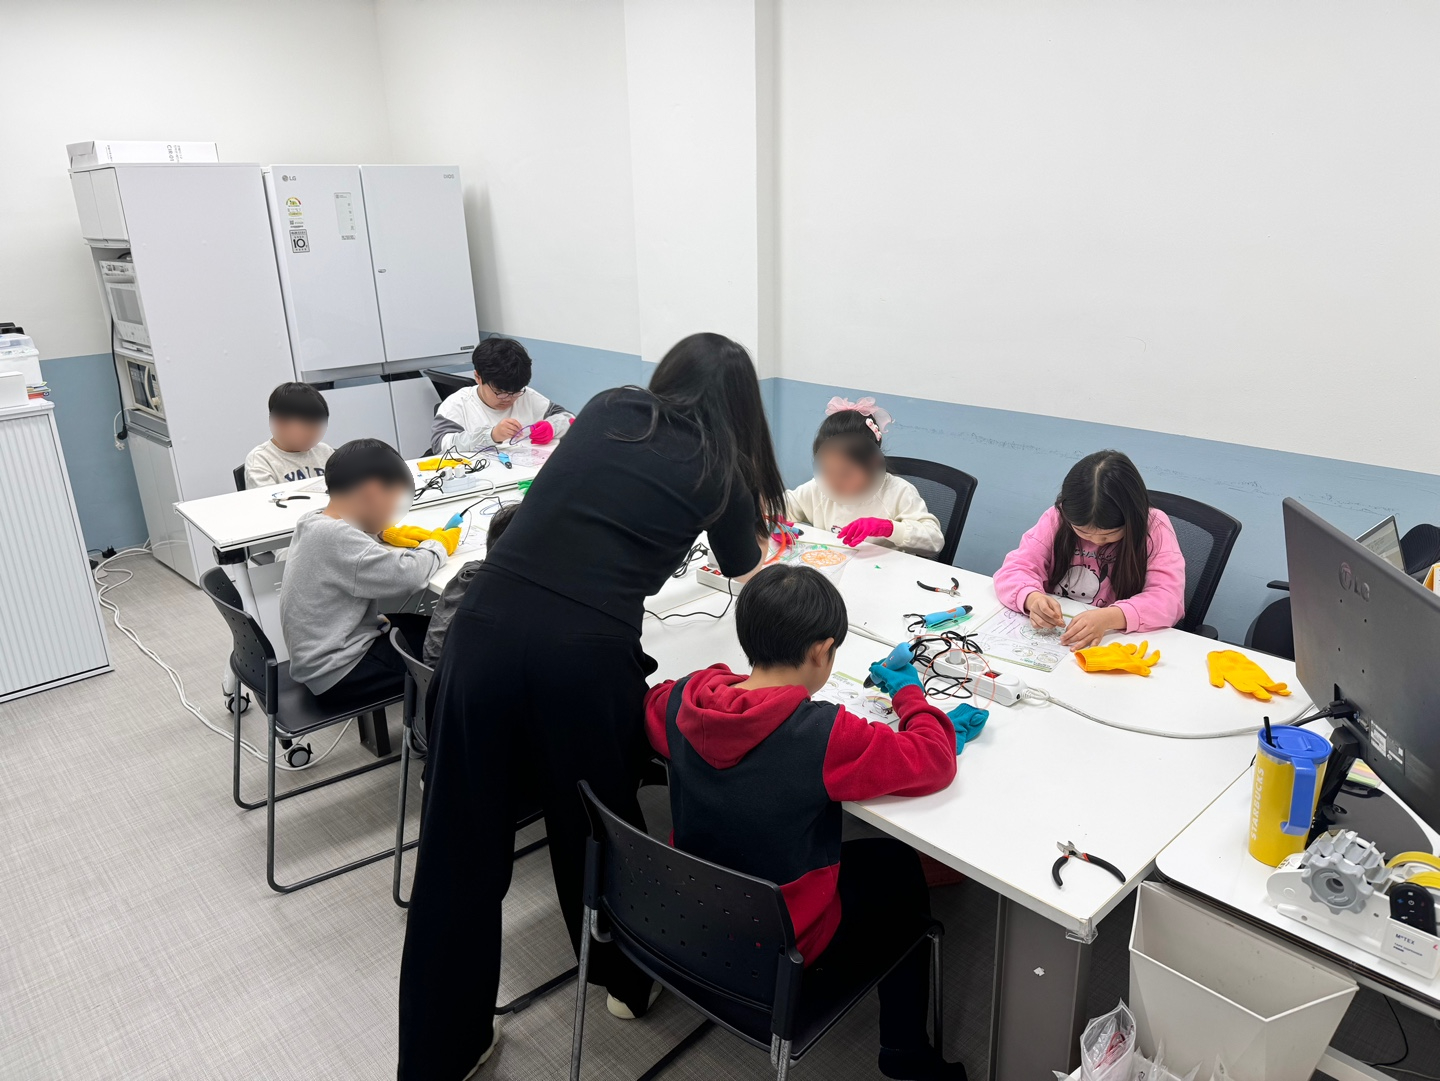 3D펜을 이용한 토탈공예 수업을 받고 있는 돌봄 아이들의 모습 